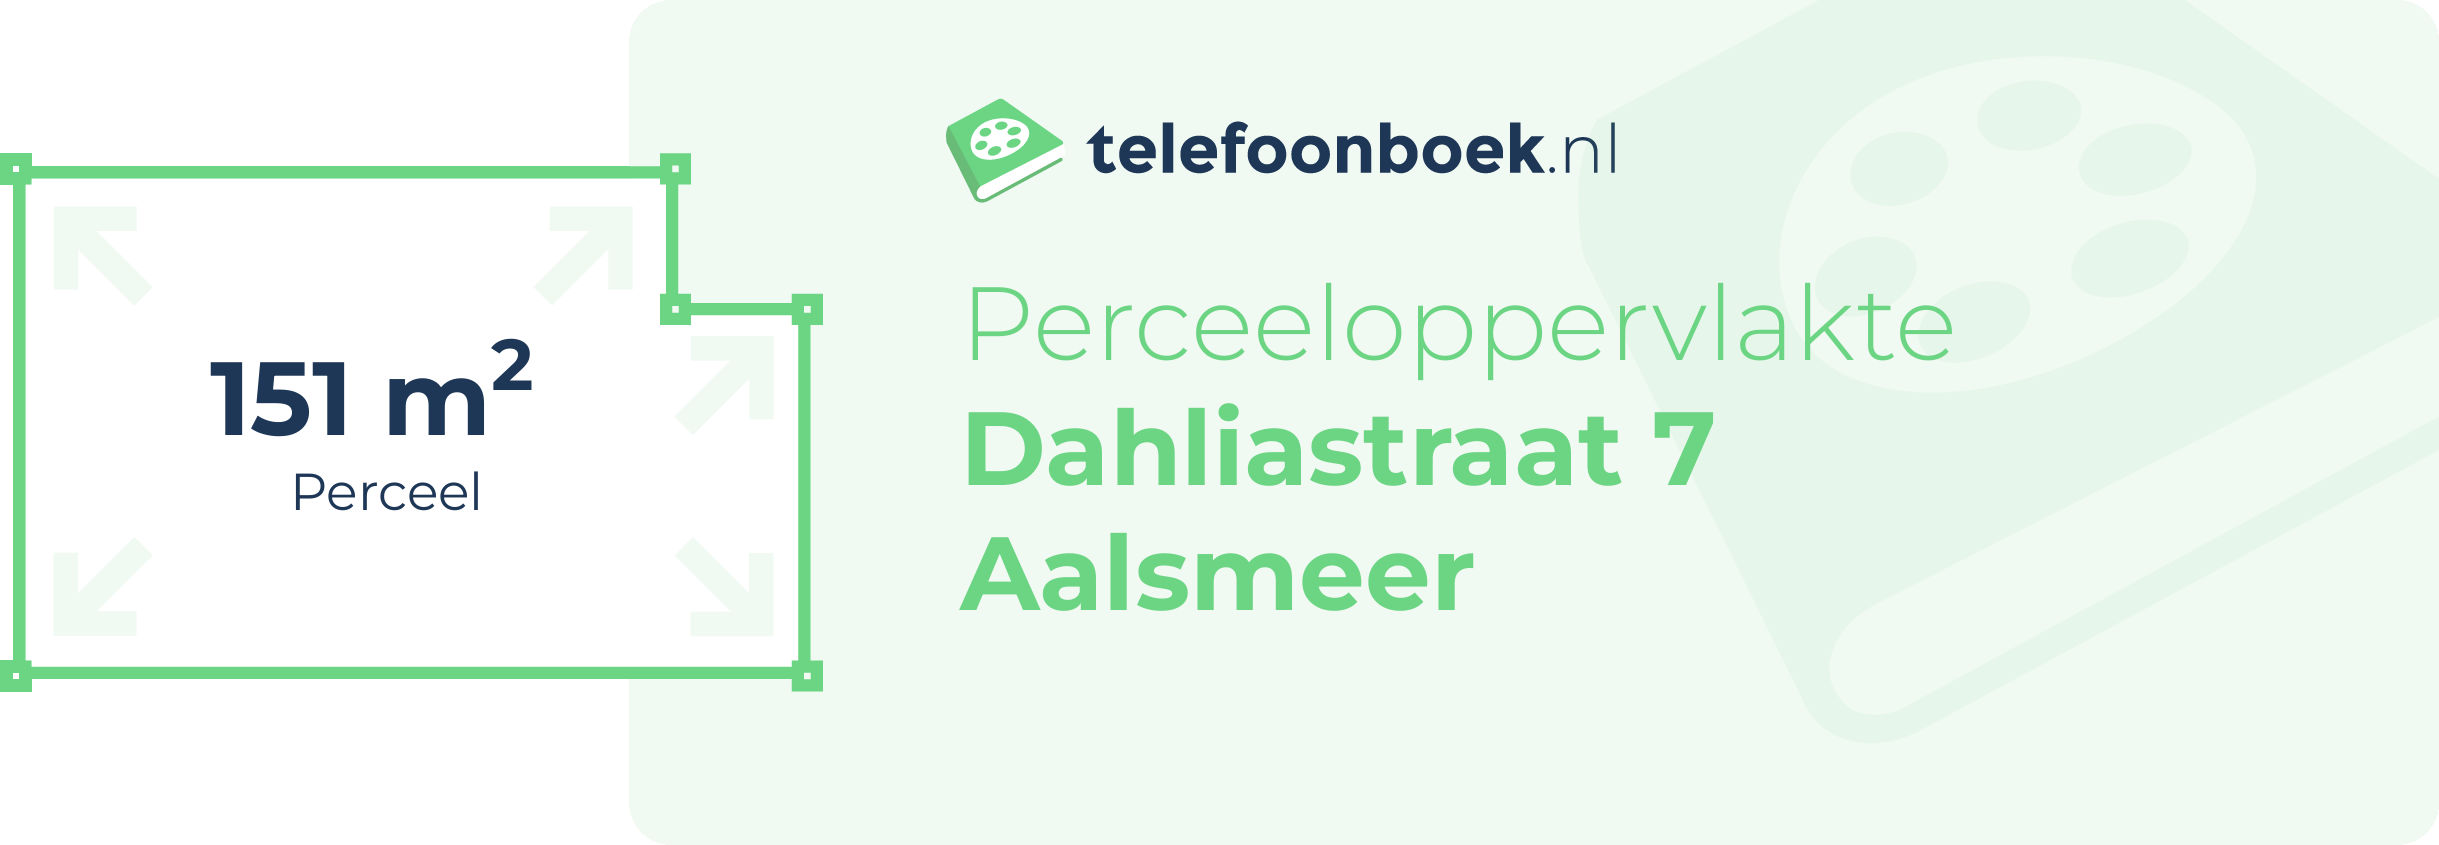 Perceeloppervlakte Dahliastraat 7 Aalsmeer